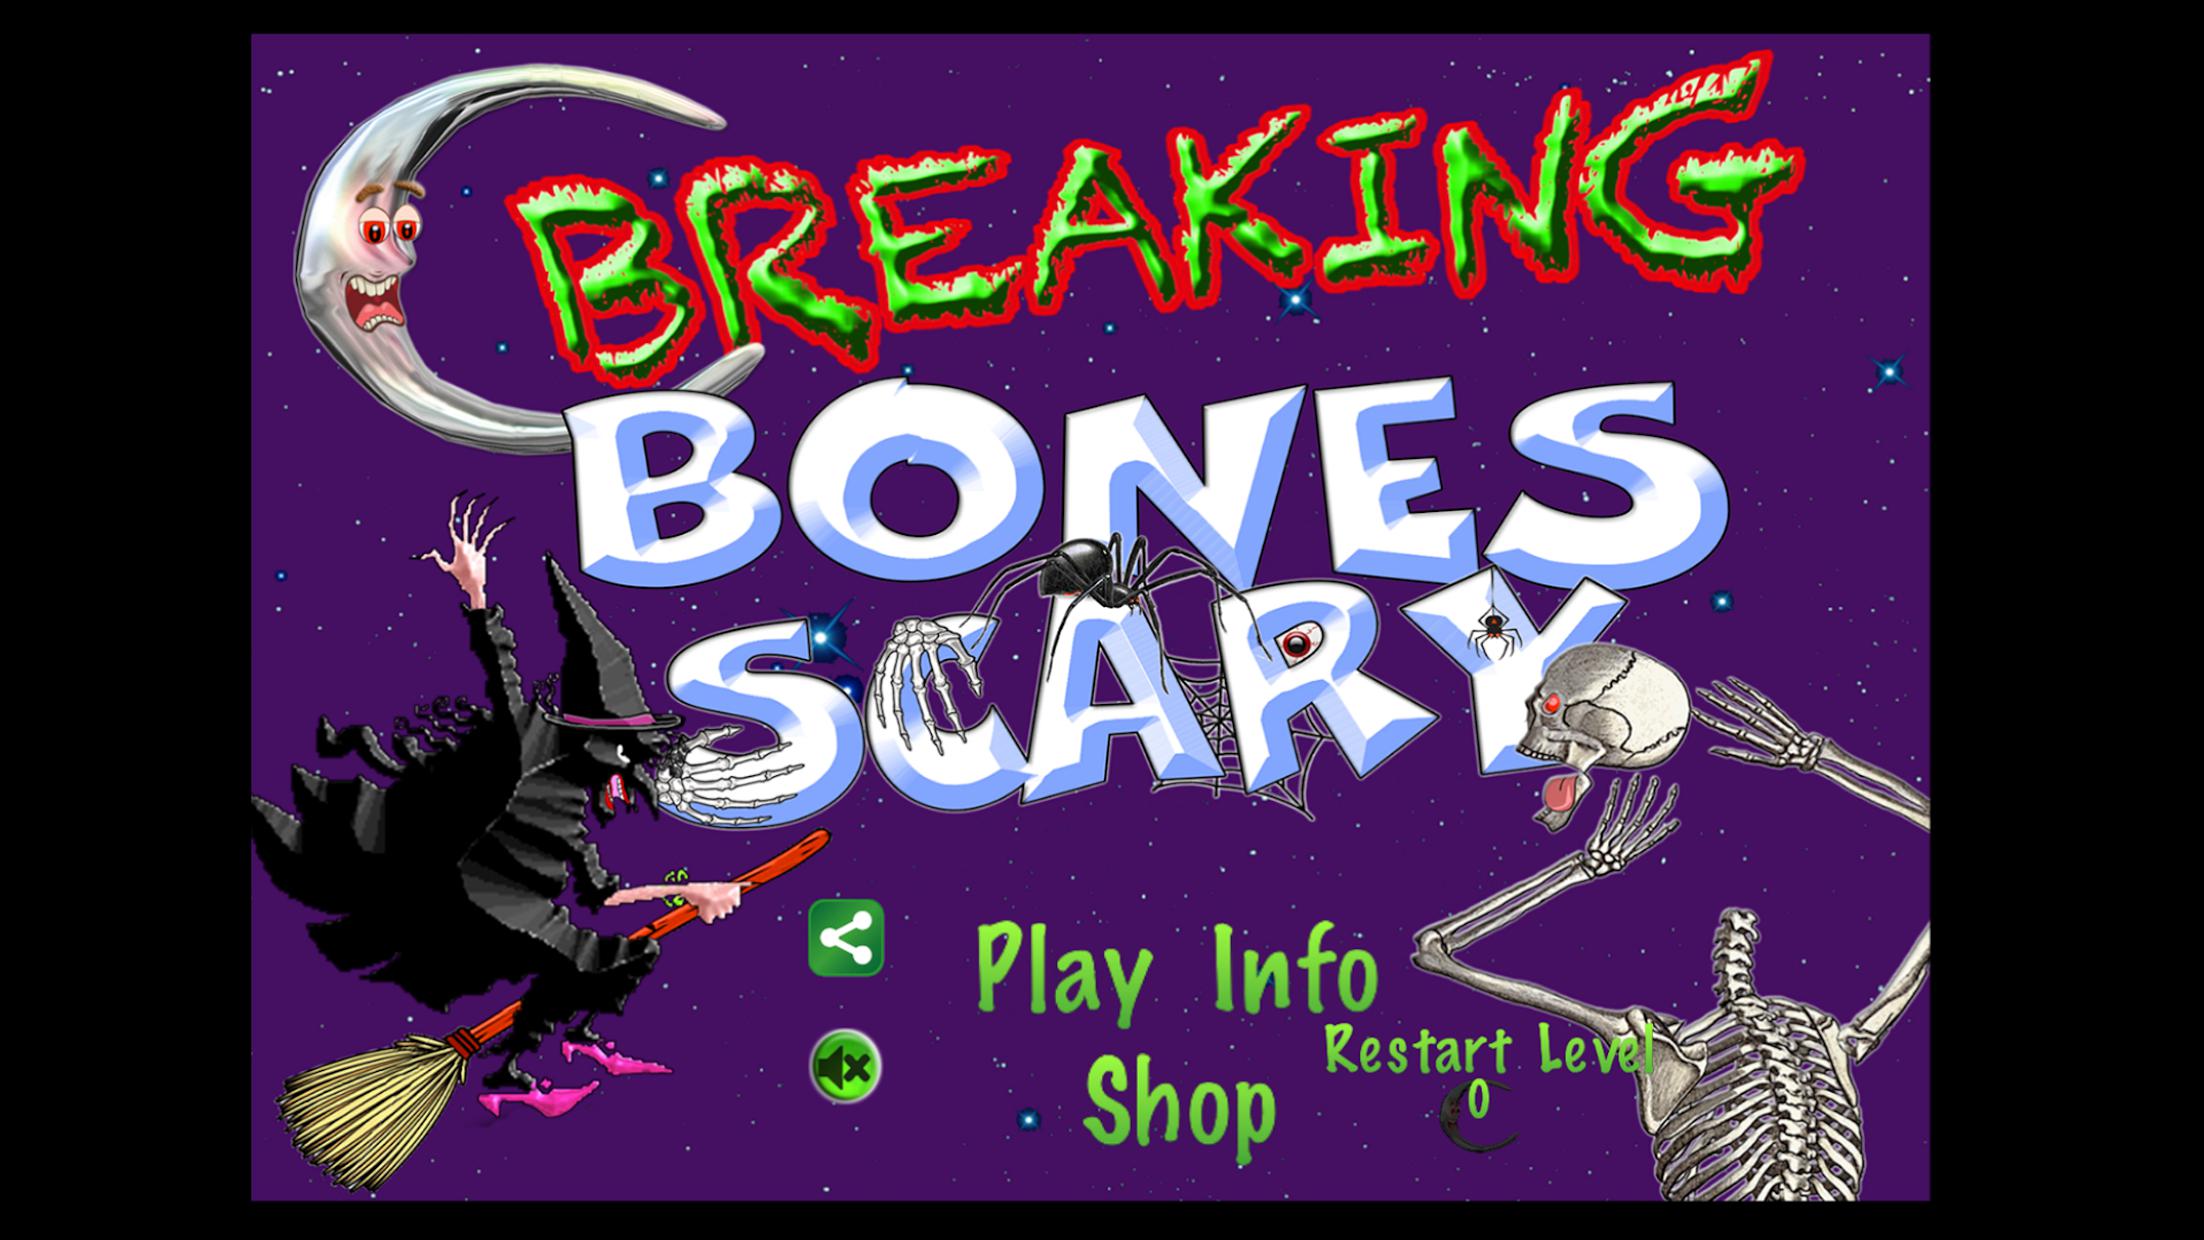 Breaking Bones Scary